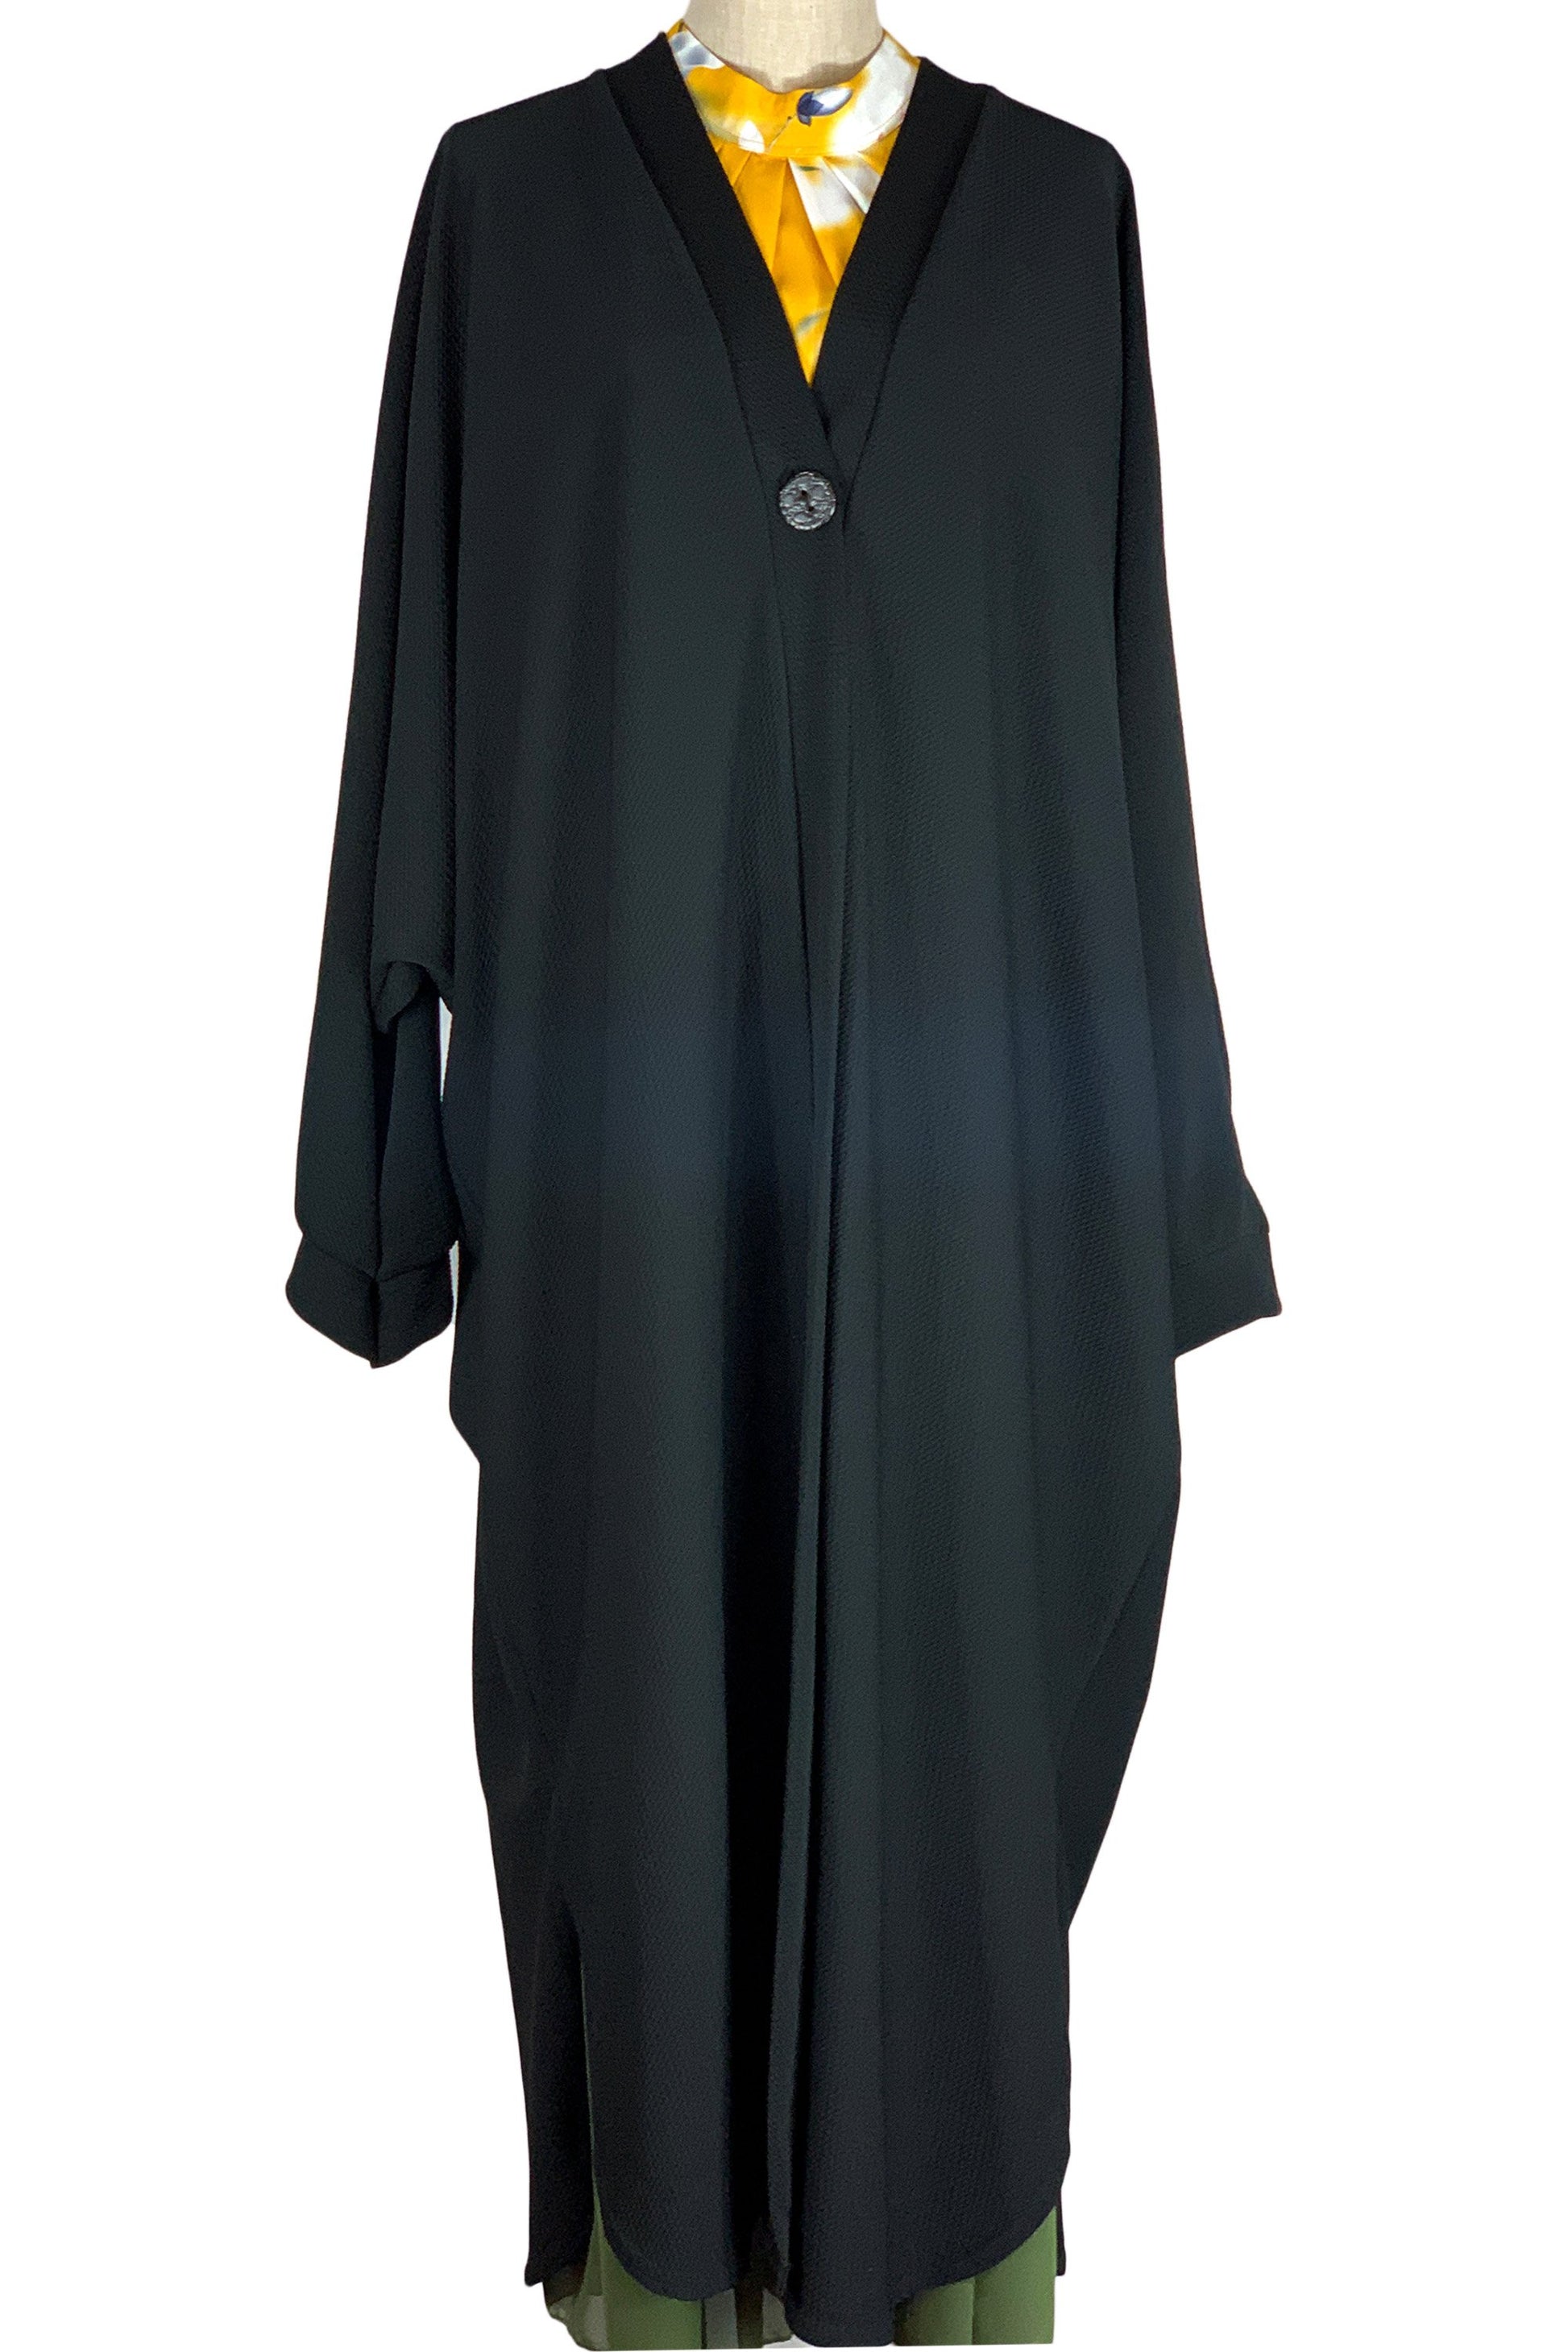 Women's loose free size casual coat- Black-almanaar Islamic Store